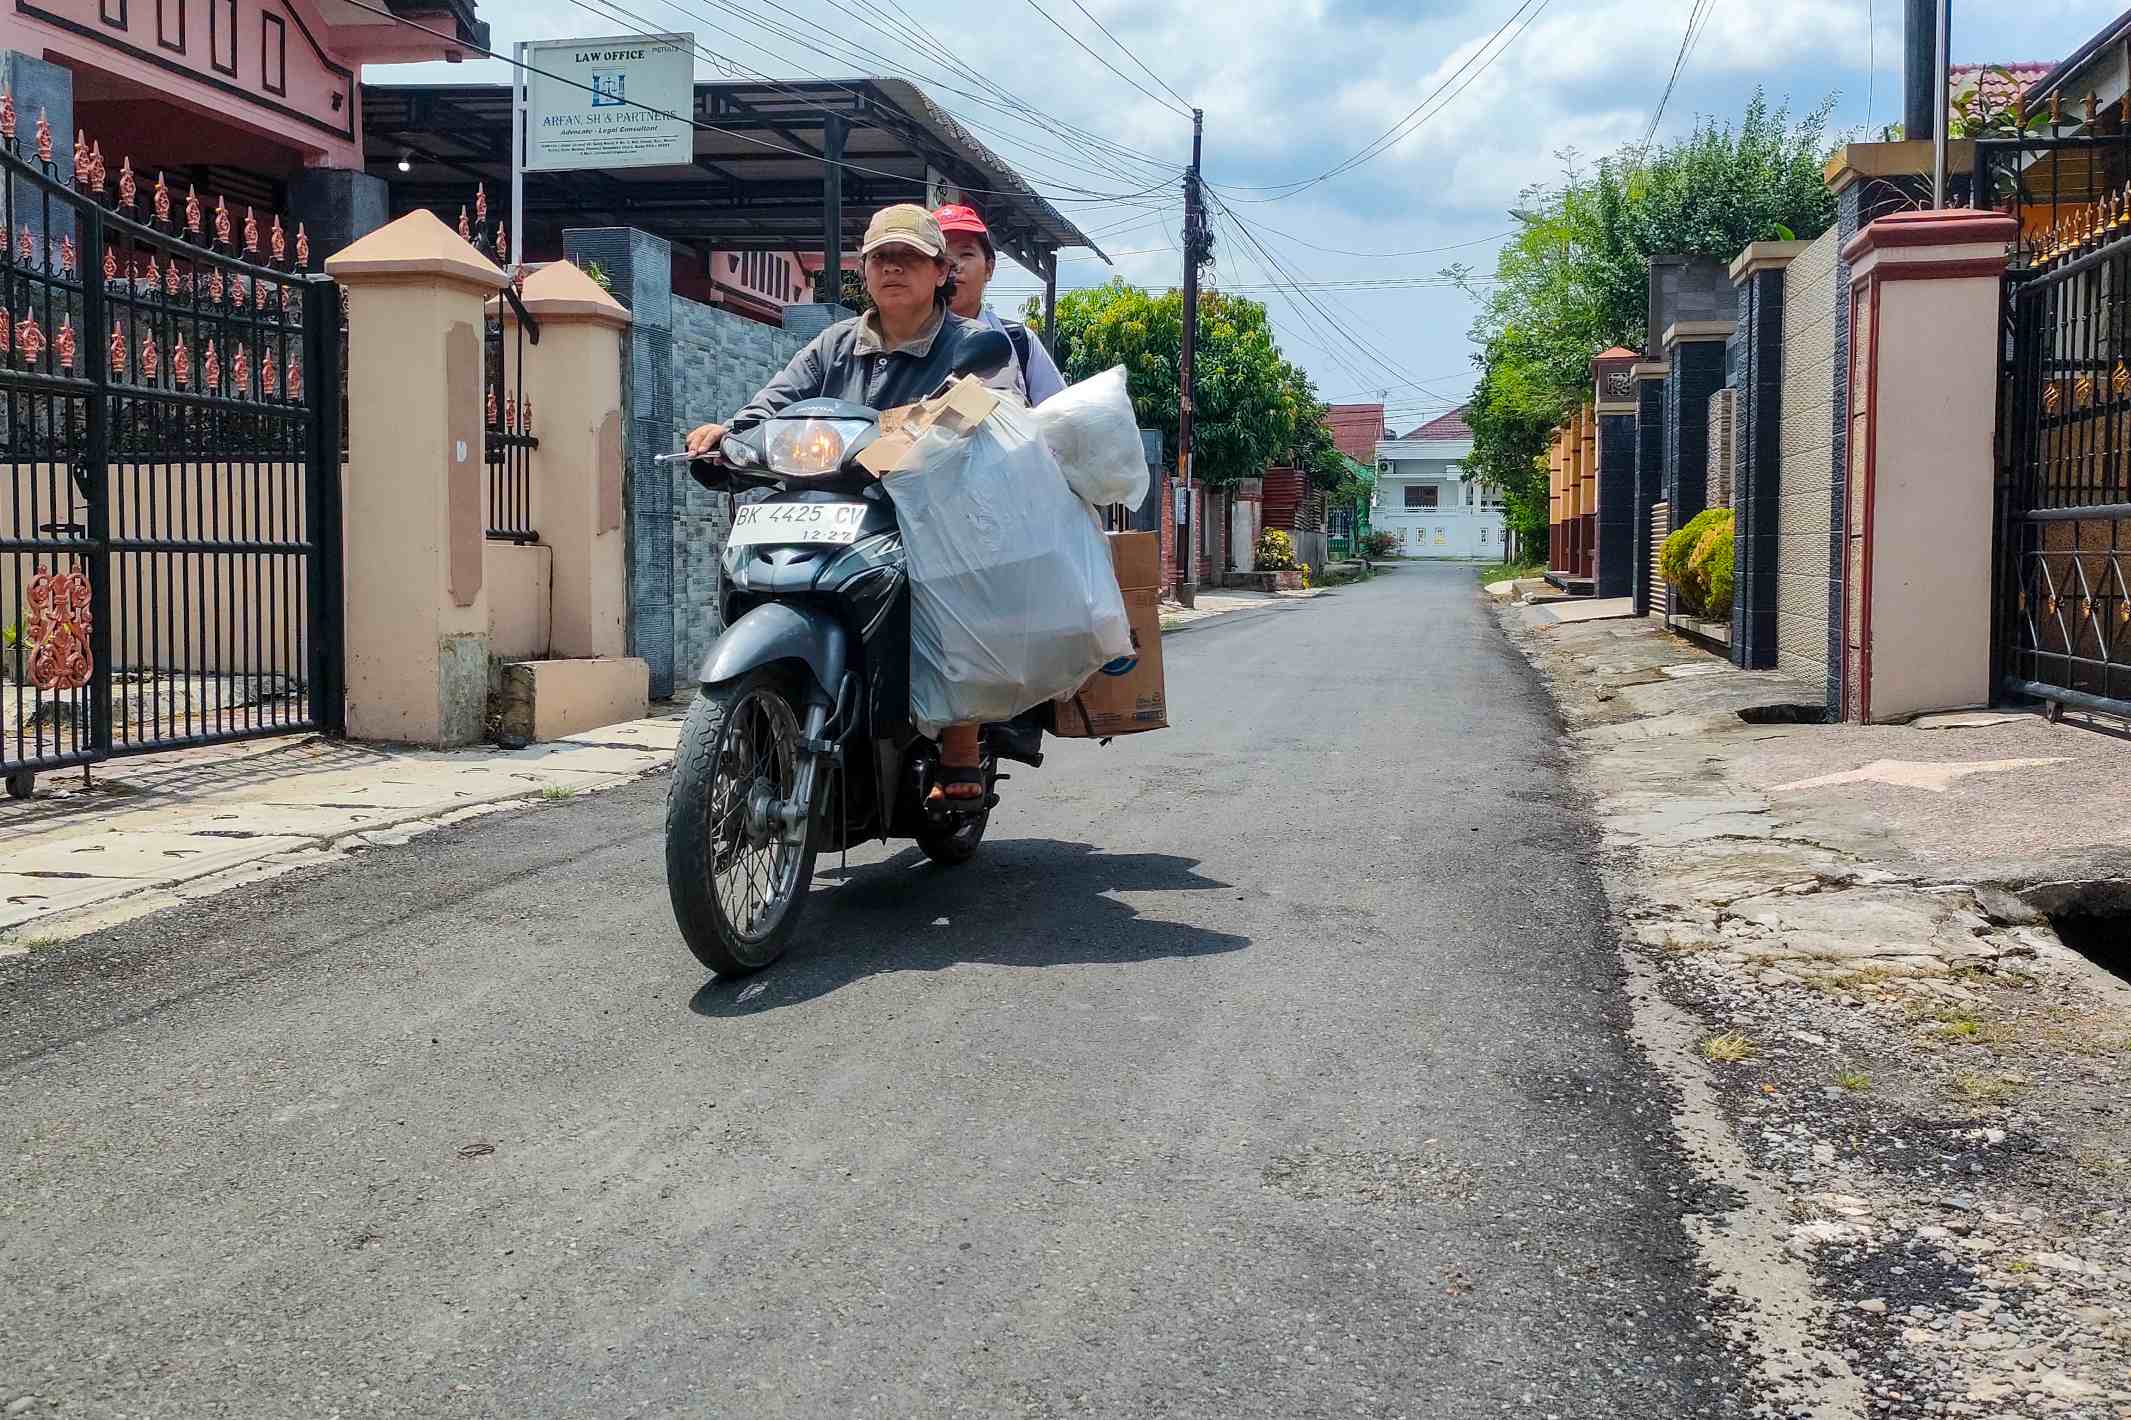 14 Tahun Merasakan Jalan Rusak, Warga Gang Murni X Medan Denai Mengaku Senang Atas Pengaspalan Jalan